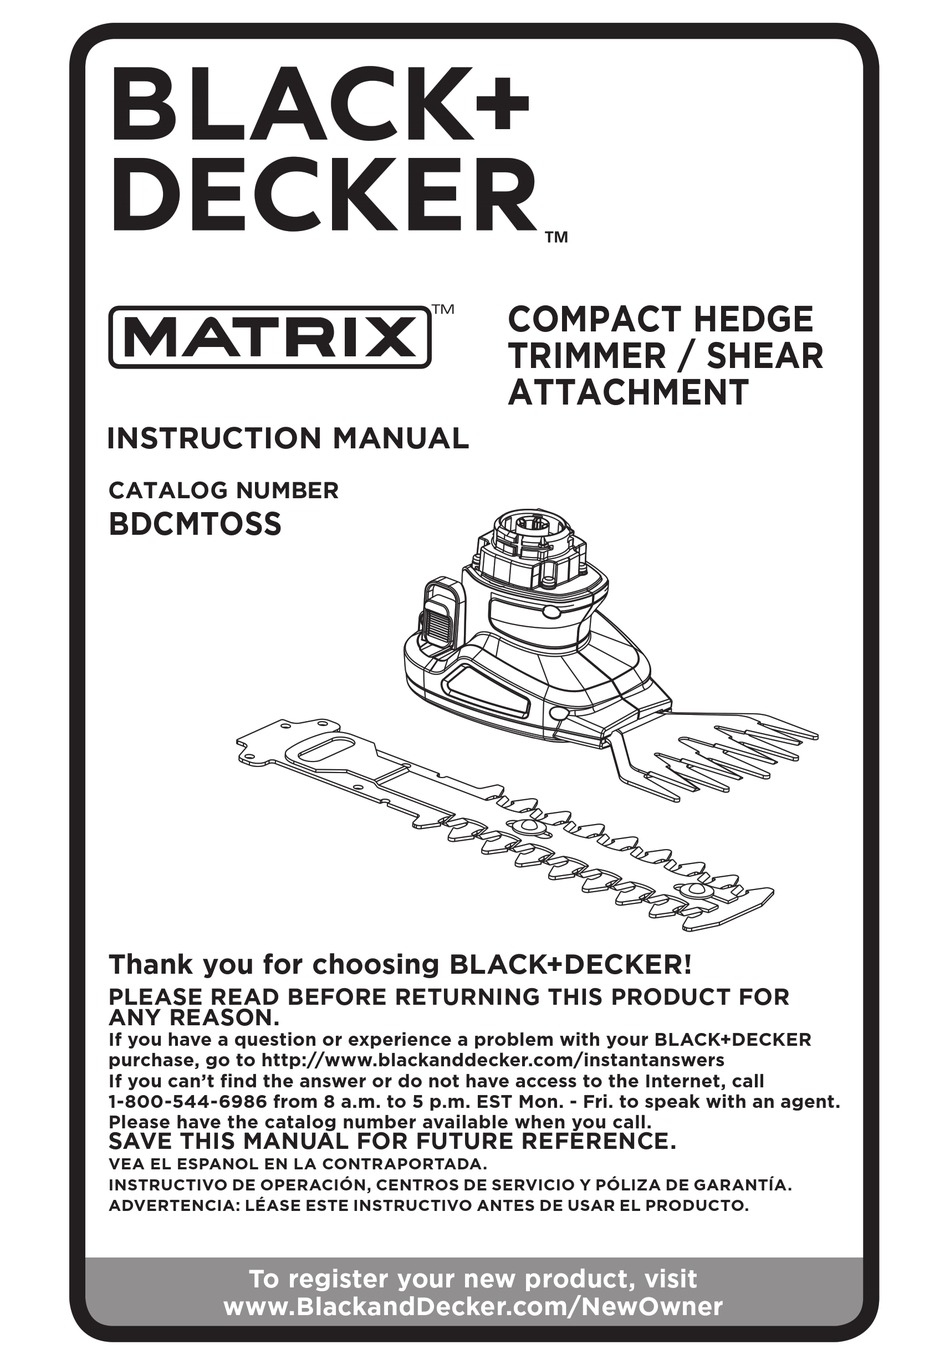 New Black & Decker Matrix Hedge Trimmer and Shear Attachments